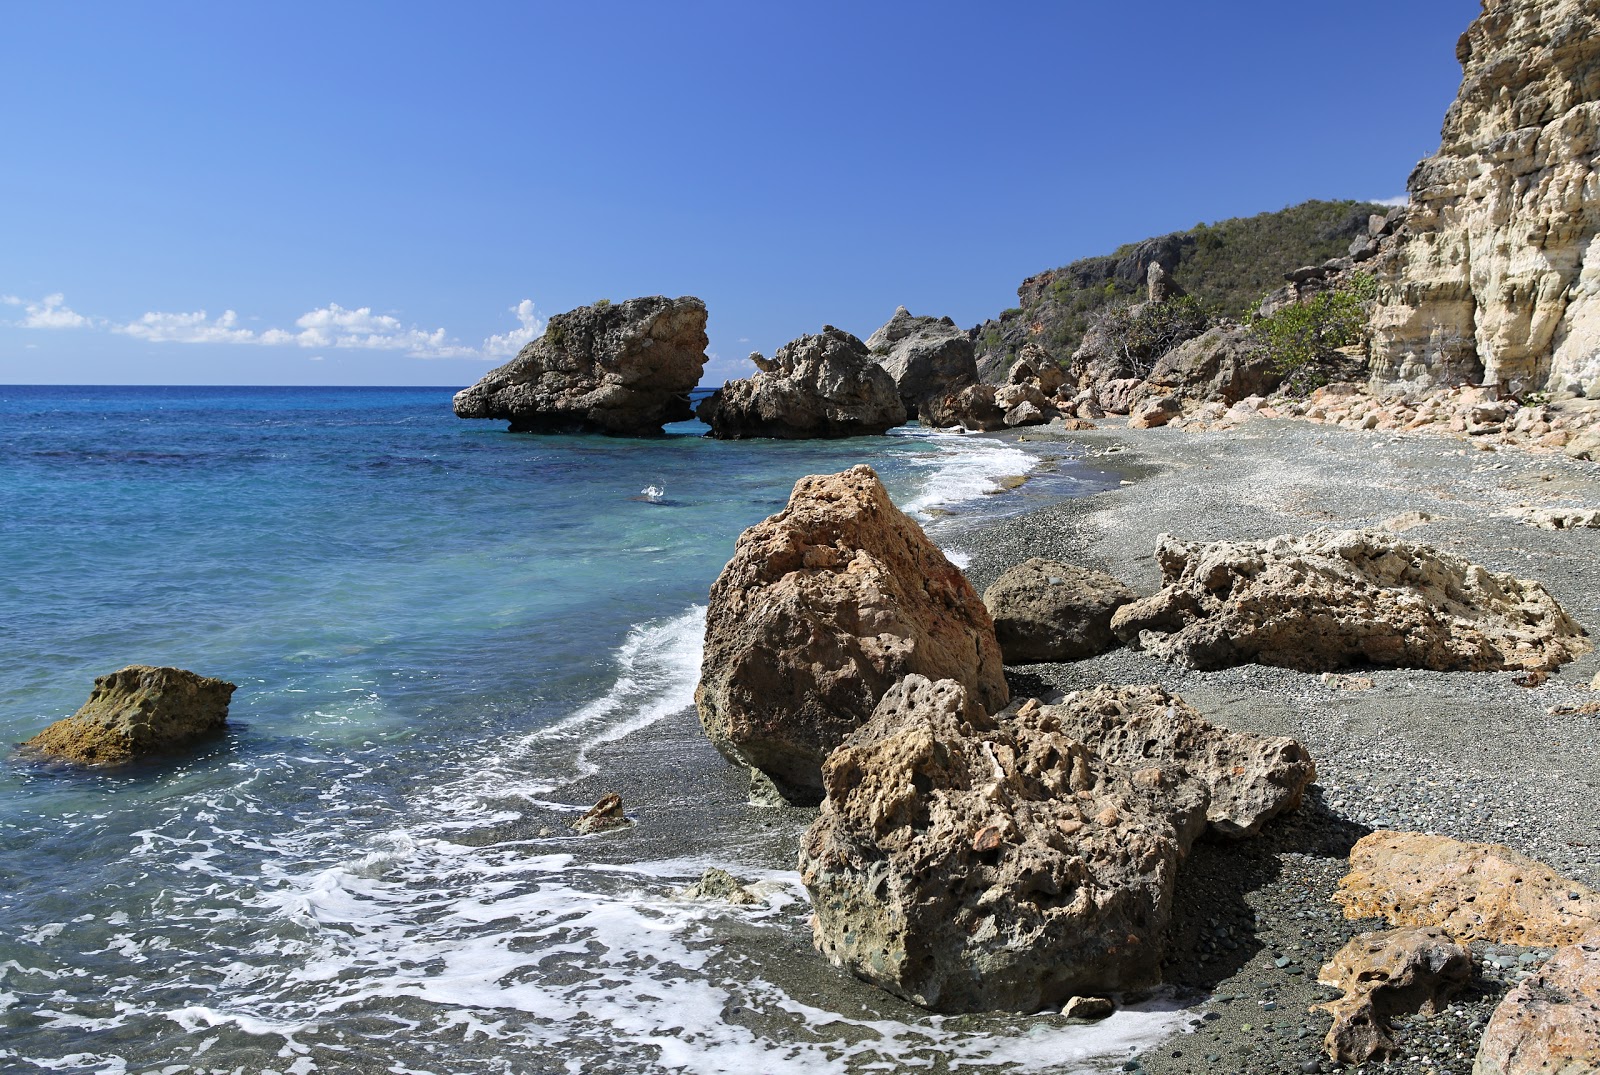 Foto von Playa de Cajobabo mit grauer kies Oberfläche